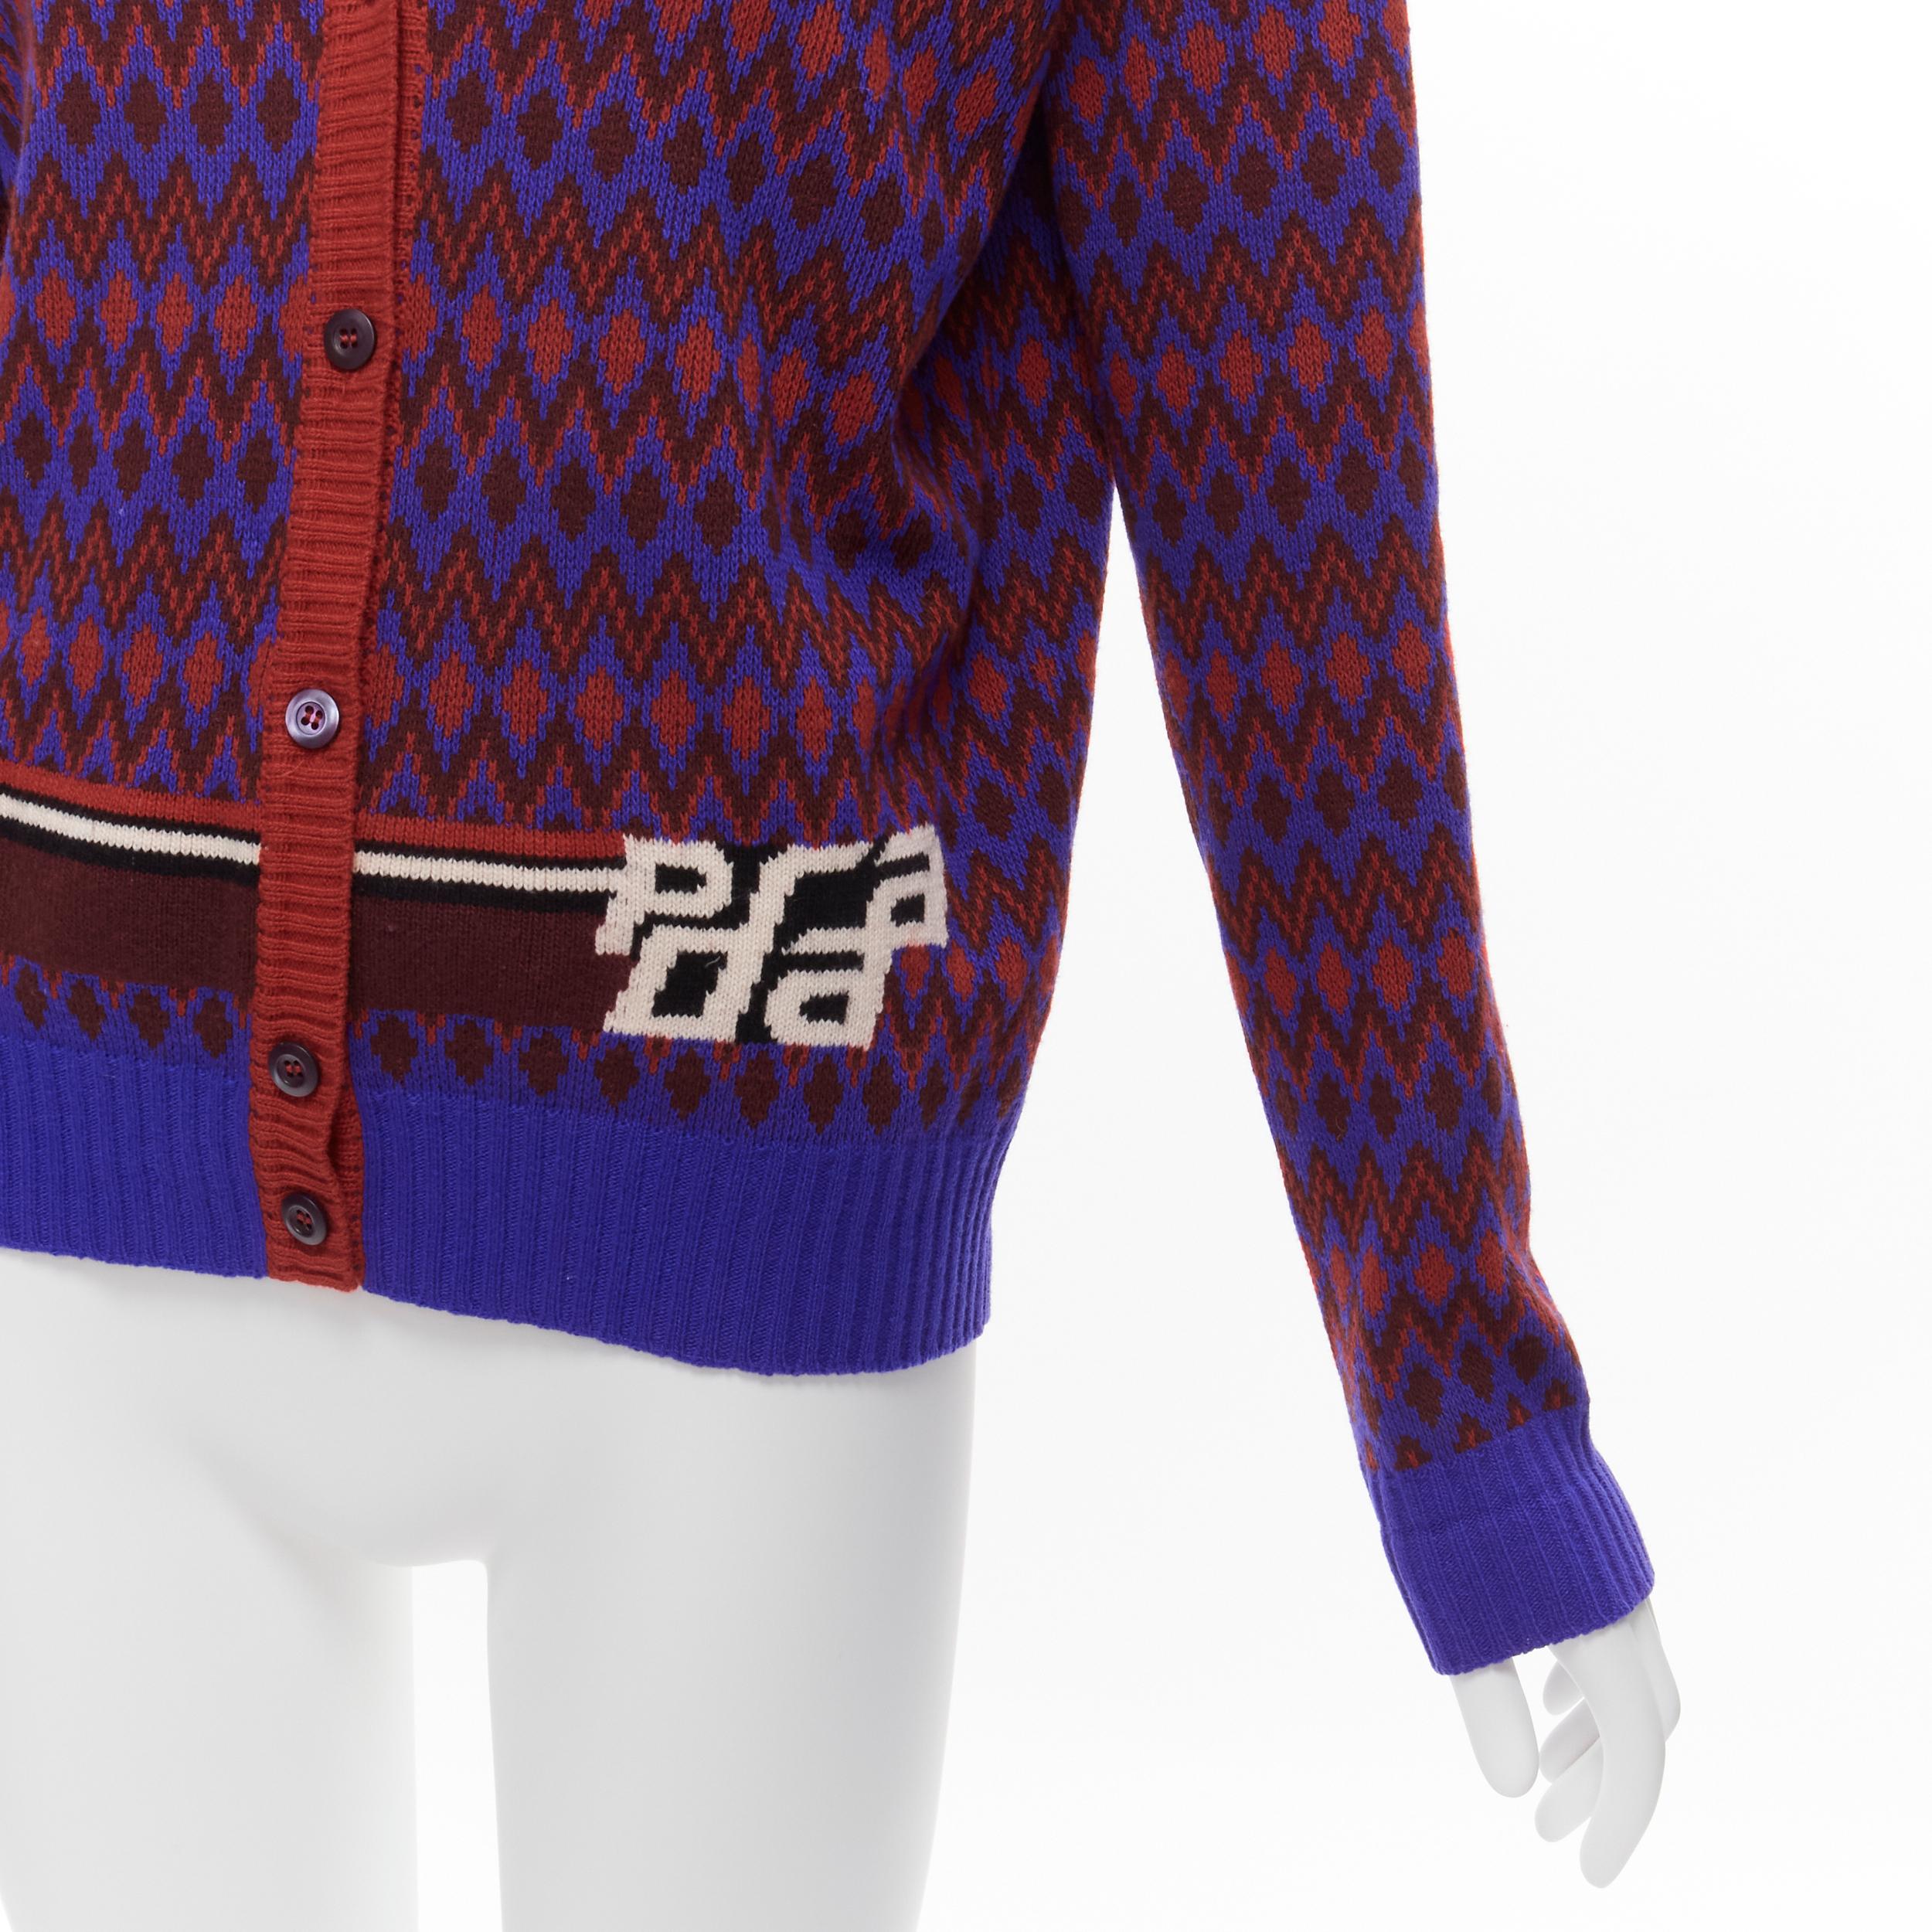 PRADA 2018 purple wool cashmere racing logo chevron intarsia cardigan IT38 XS
Reference: TGAS/C02024
Brand: Prada
Designer: Miuccia Prada
Collection: 2018
Material: Virgin Wool, Cashmere
Color: Red, Blue
Pattern: Chevron
Closure: Button
Made in: